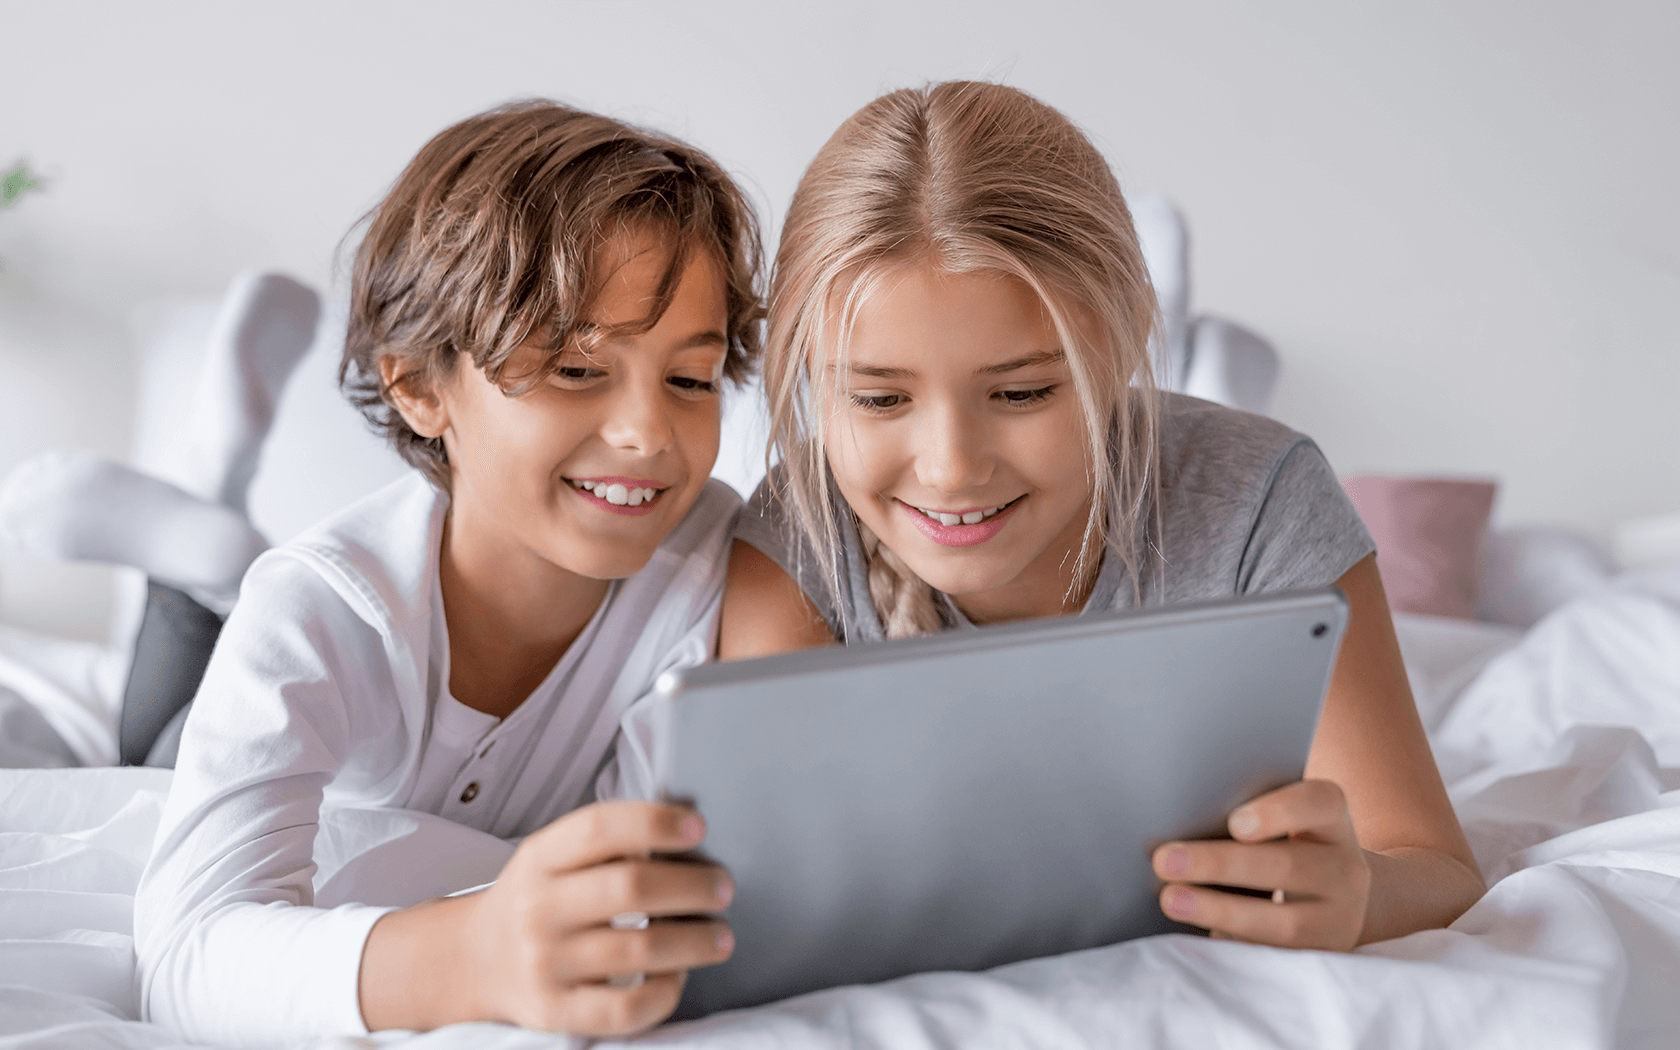 Five Easy Ways to Keep Kids Safer Online